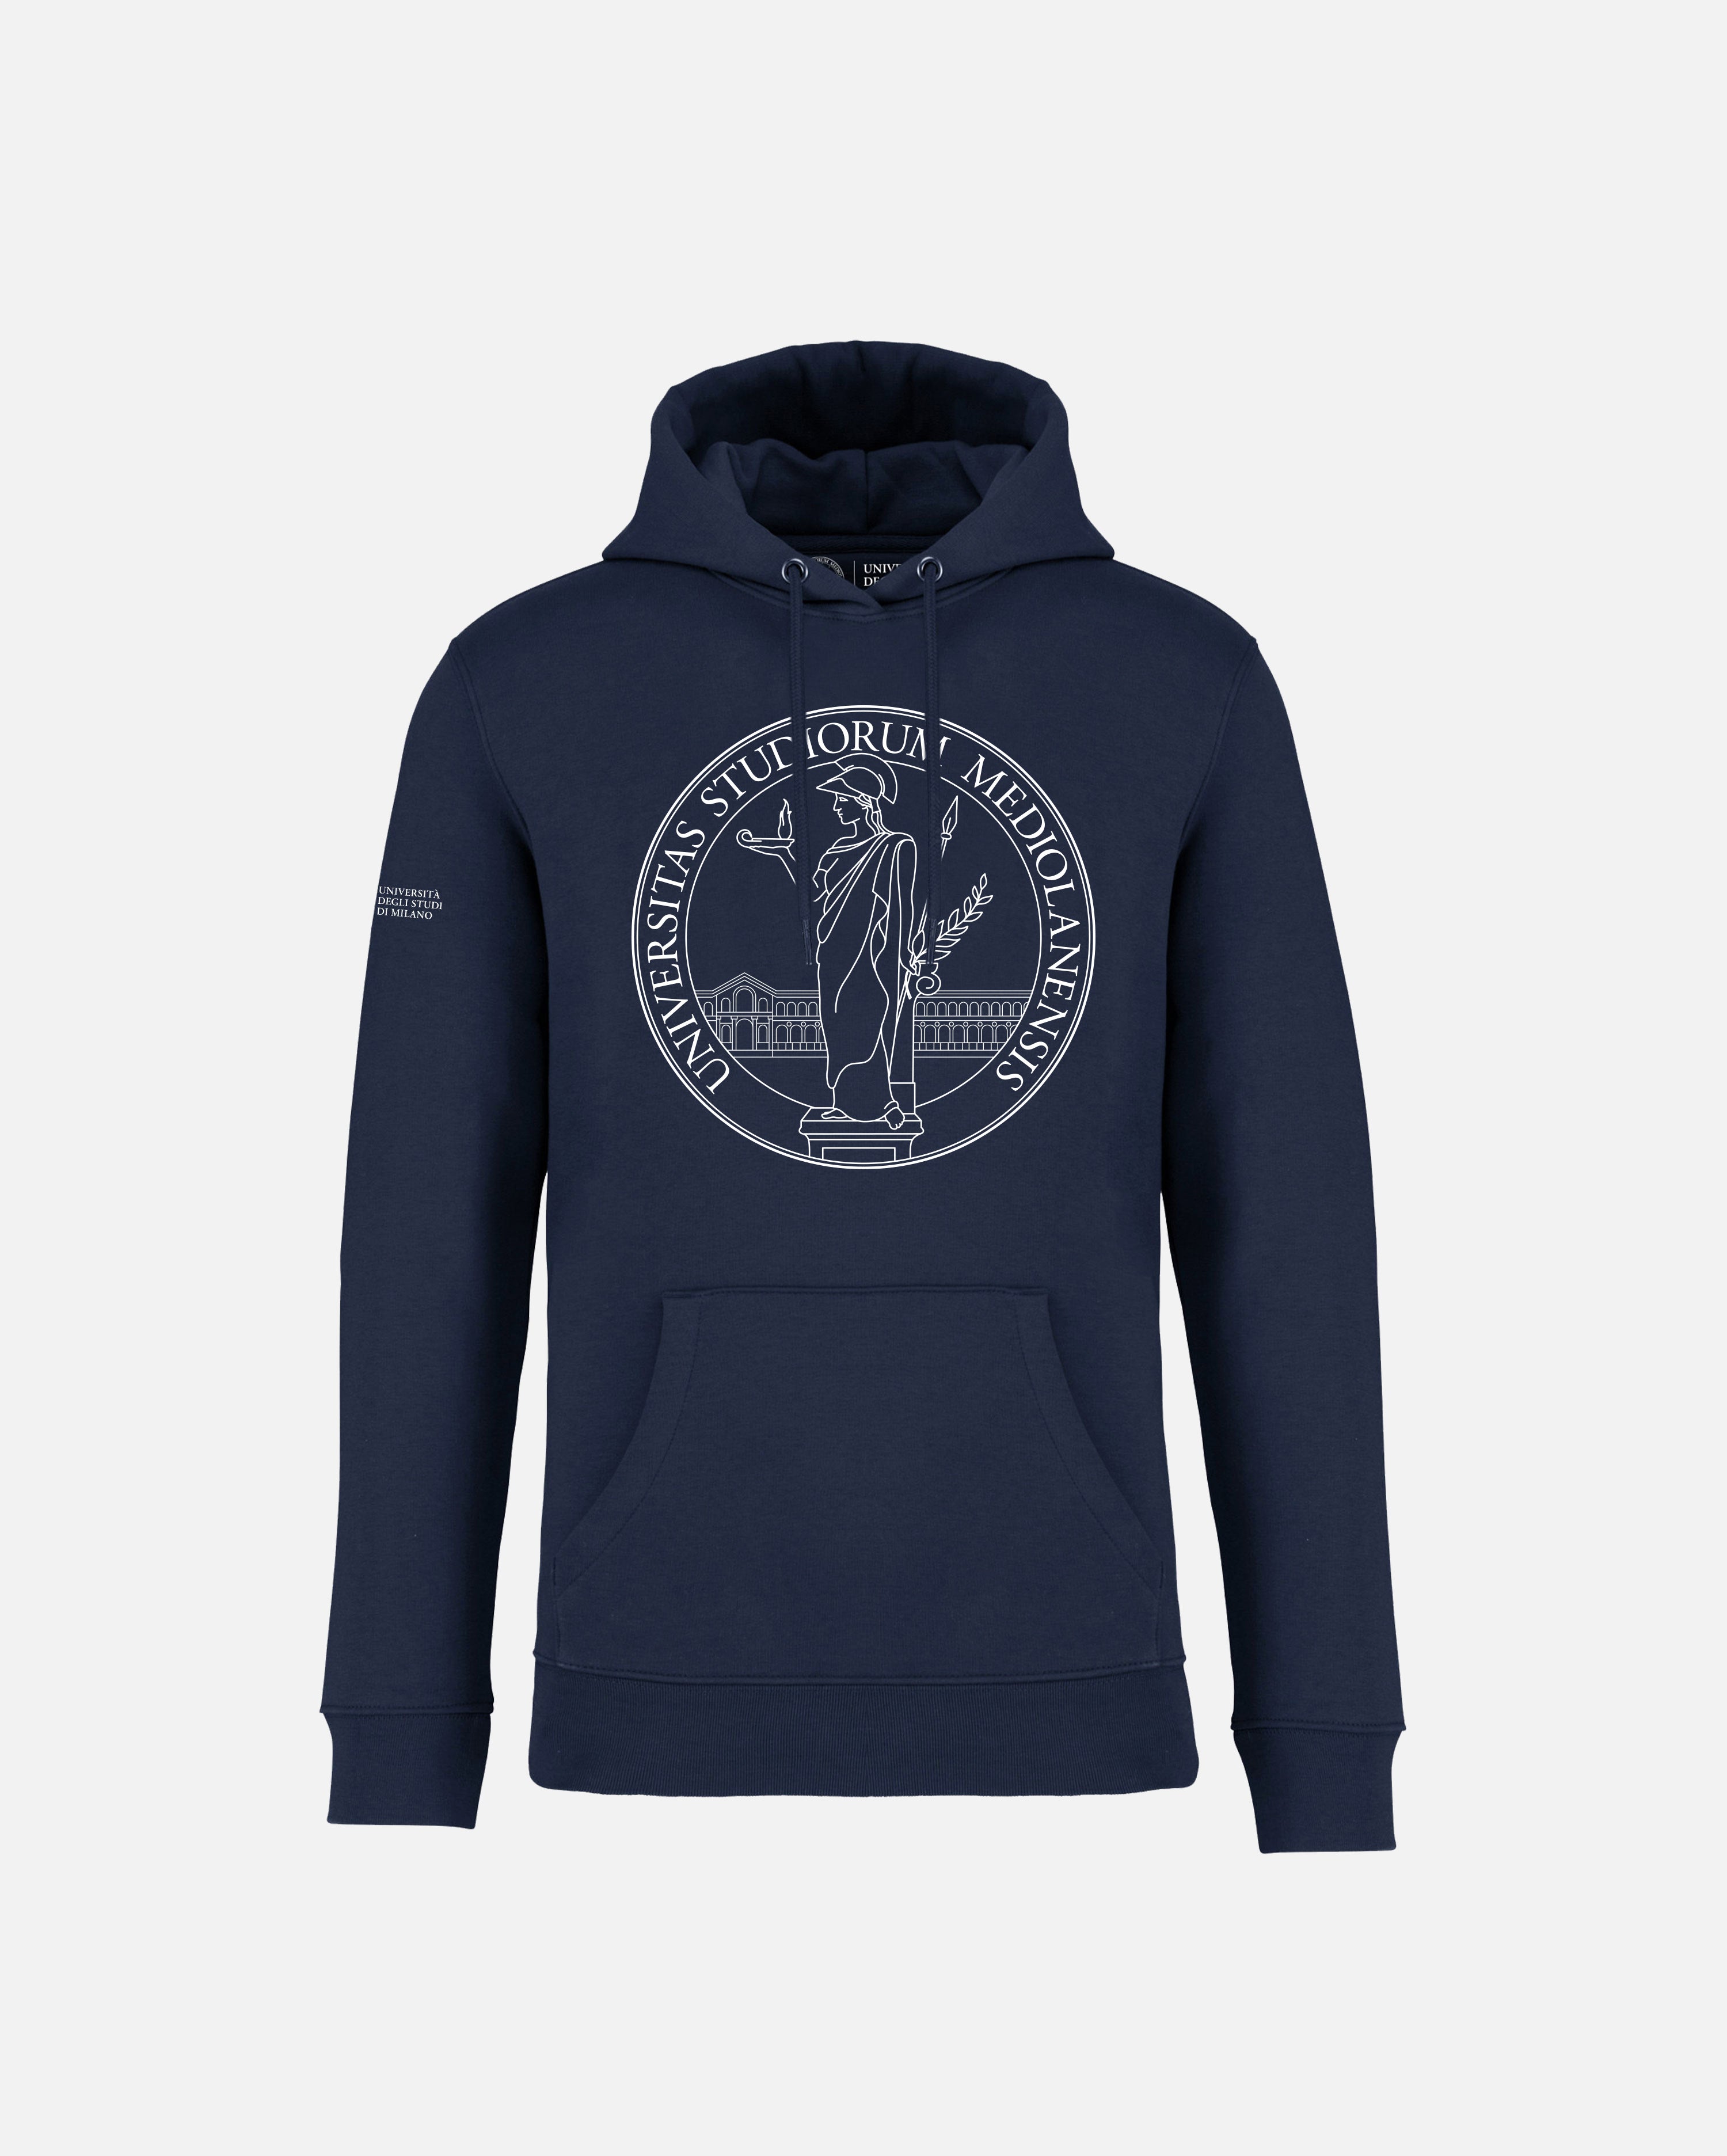 Navy Blue hoodie unisex |Unimi